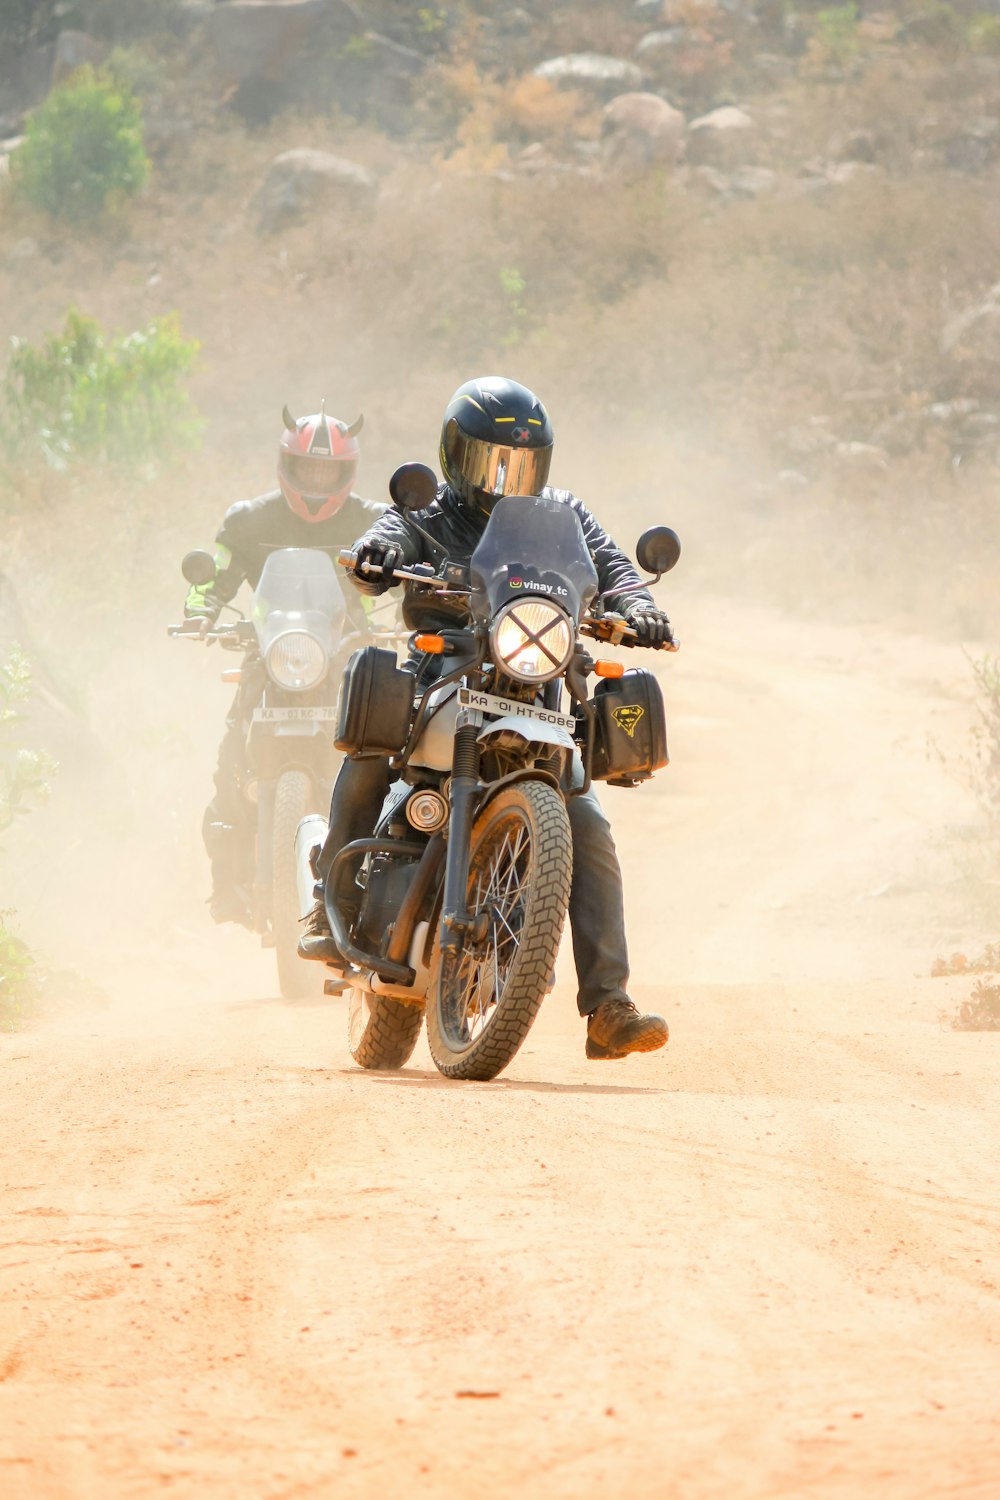 man riding motorcycle on dirt road during daytime